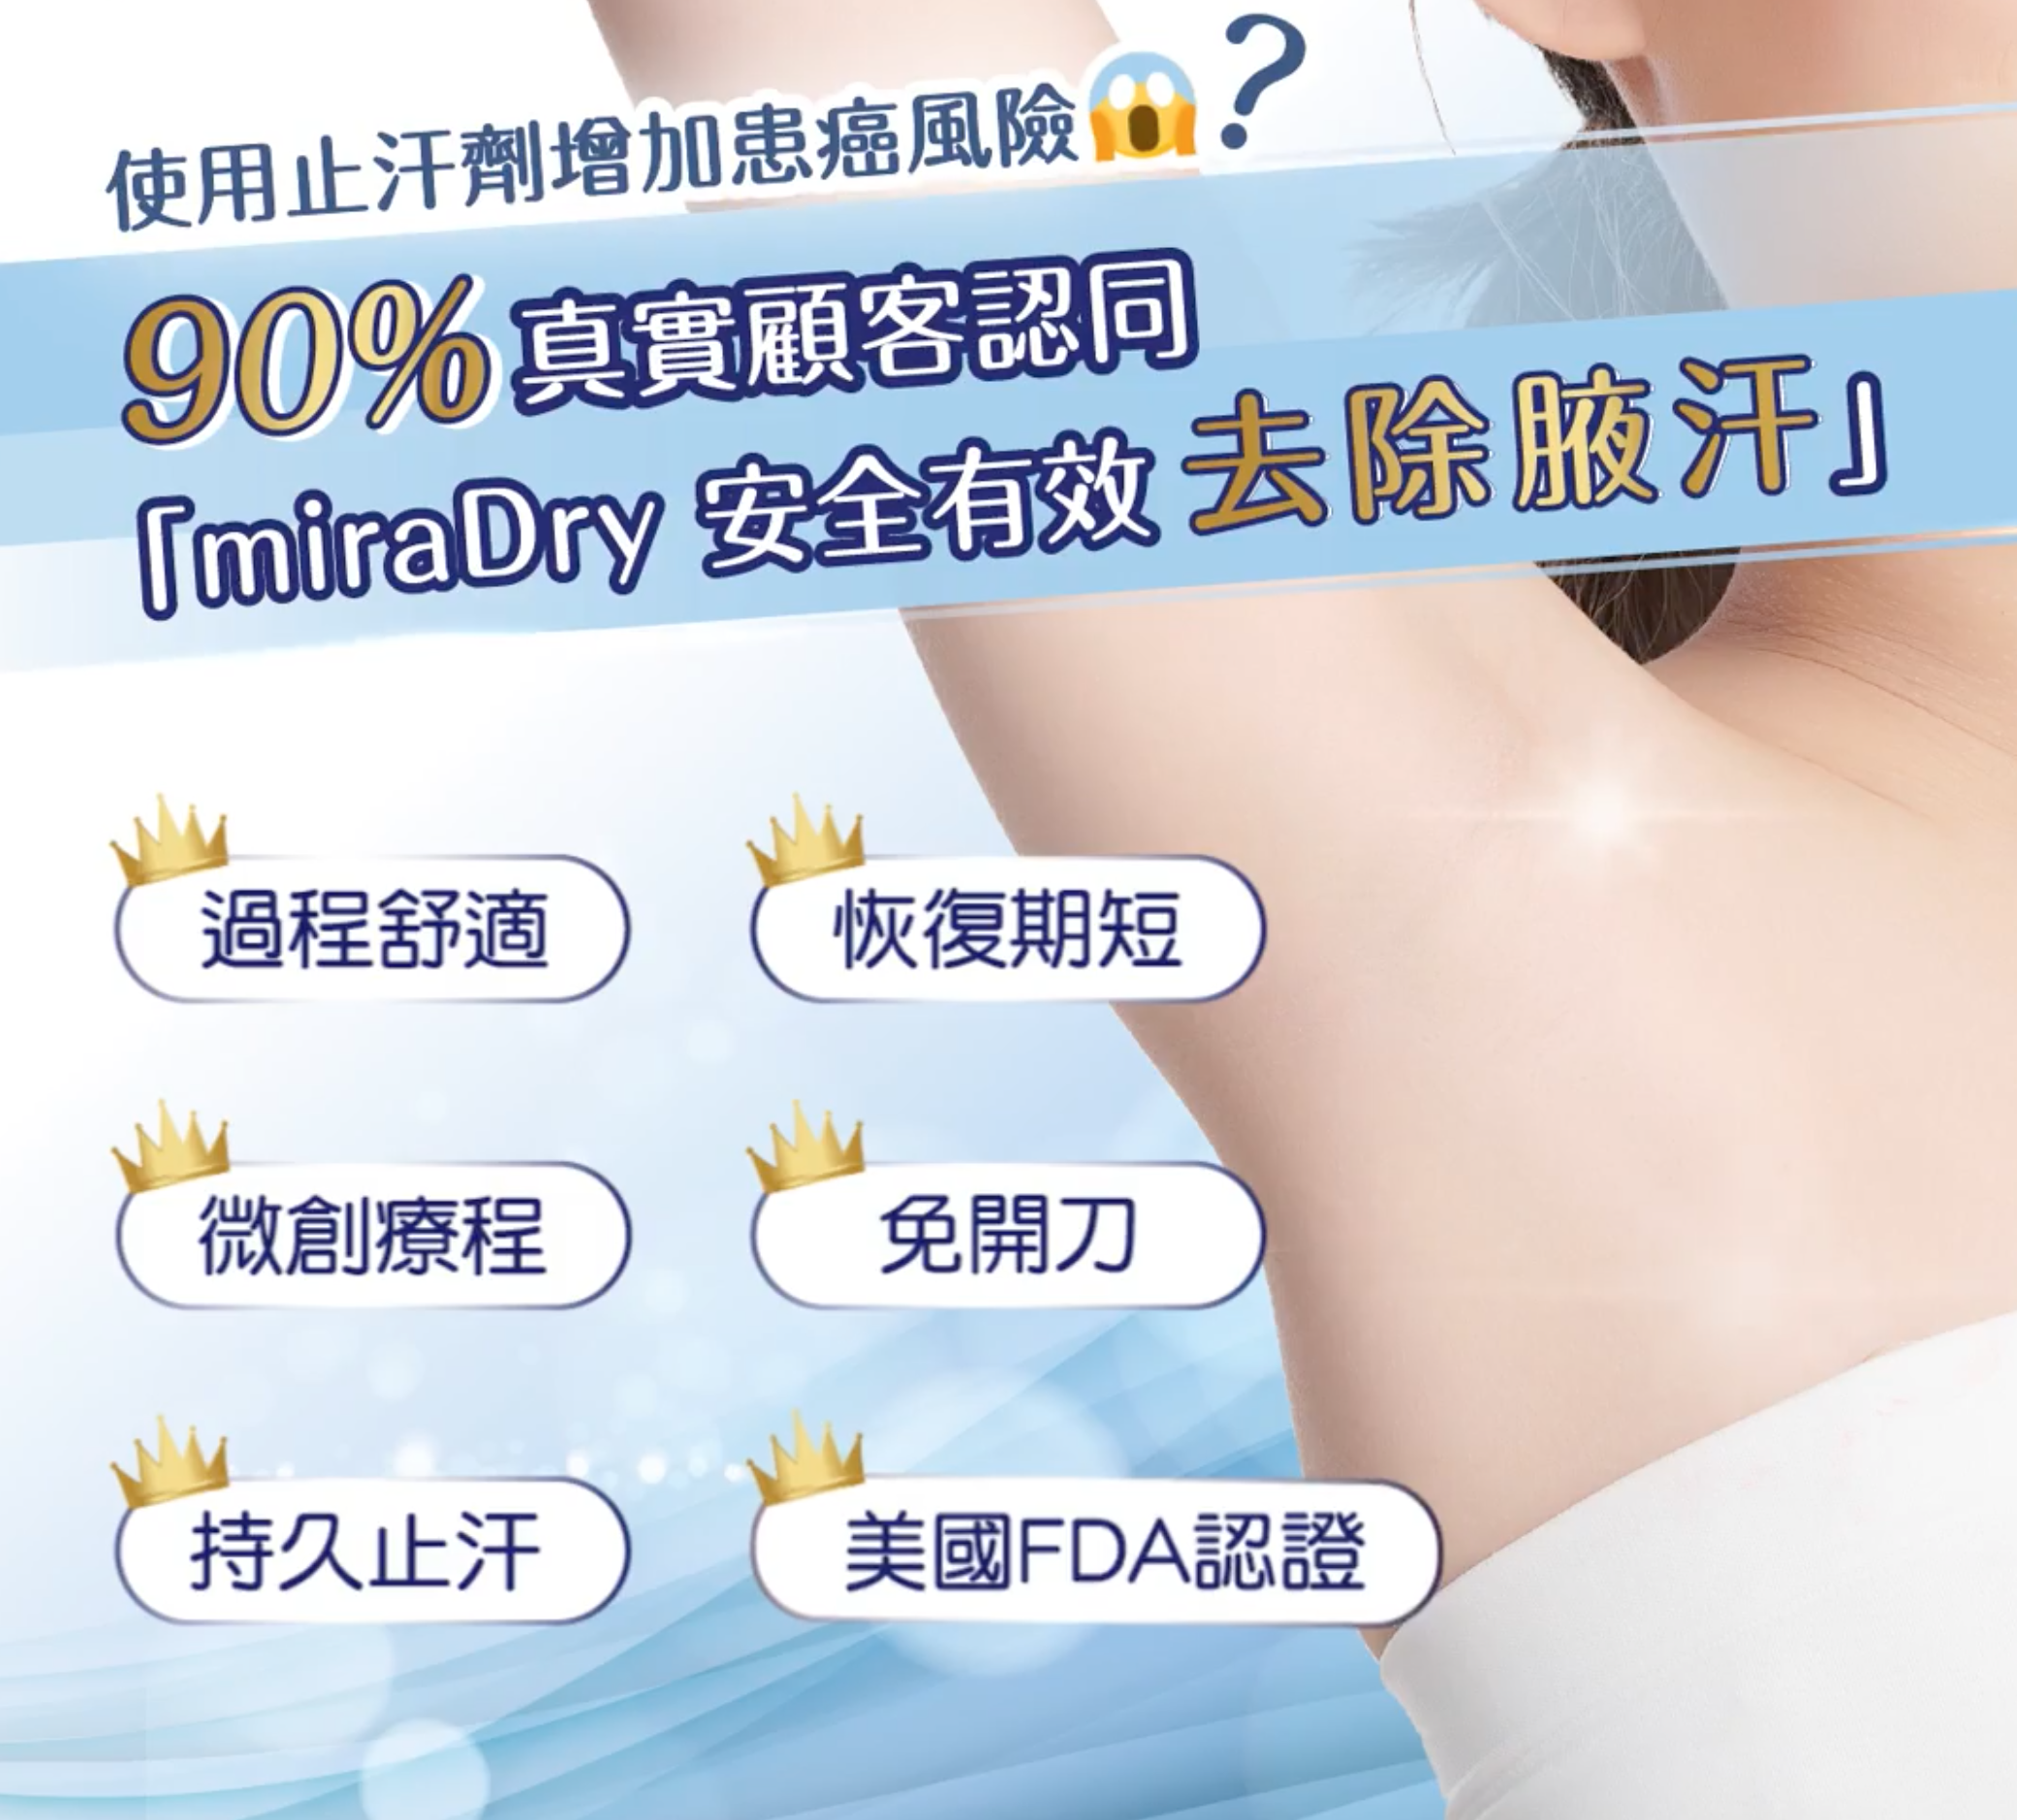 JoyMed提供香港miraDry止汗除臭狐療程，全程由專業醫護團隊主理，務求給予客戶最舒適的治療體驗。